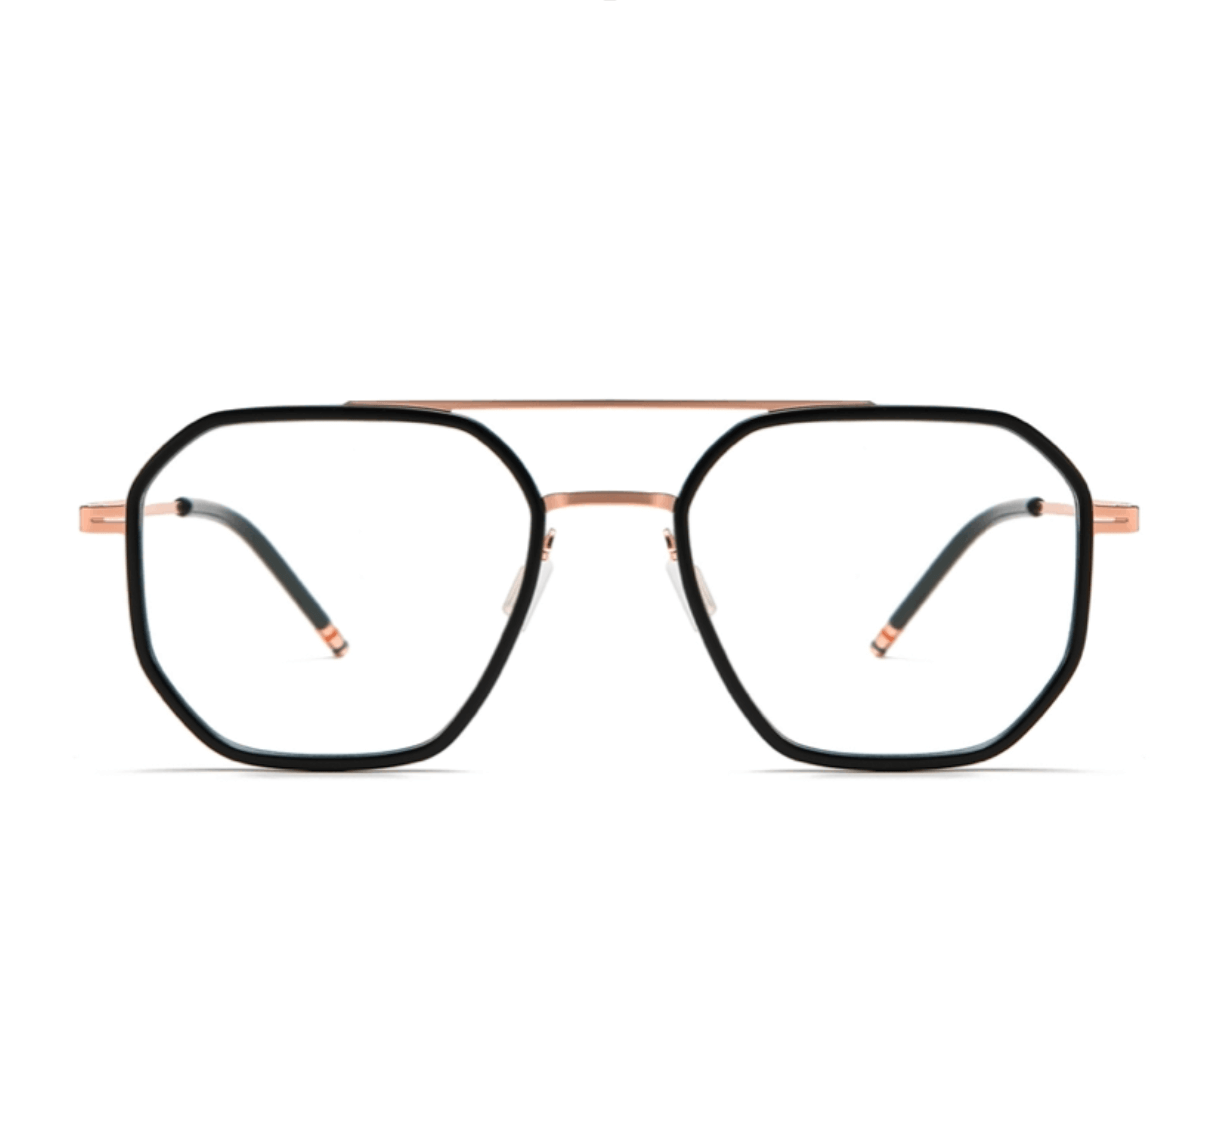 designer glasses wholesale, wholesale glasses vendors, eyewear suppliers, eyeglasses factory